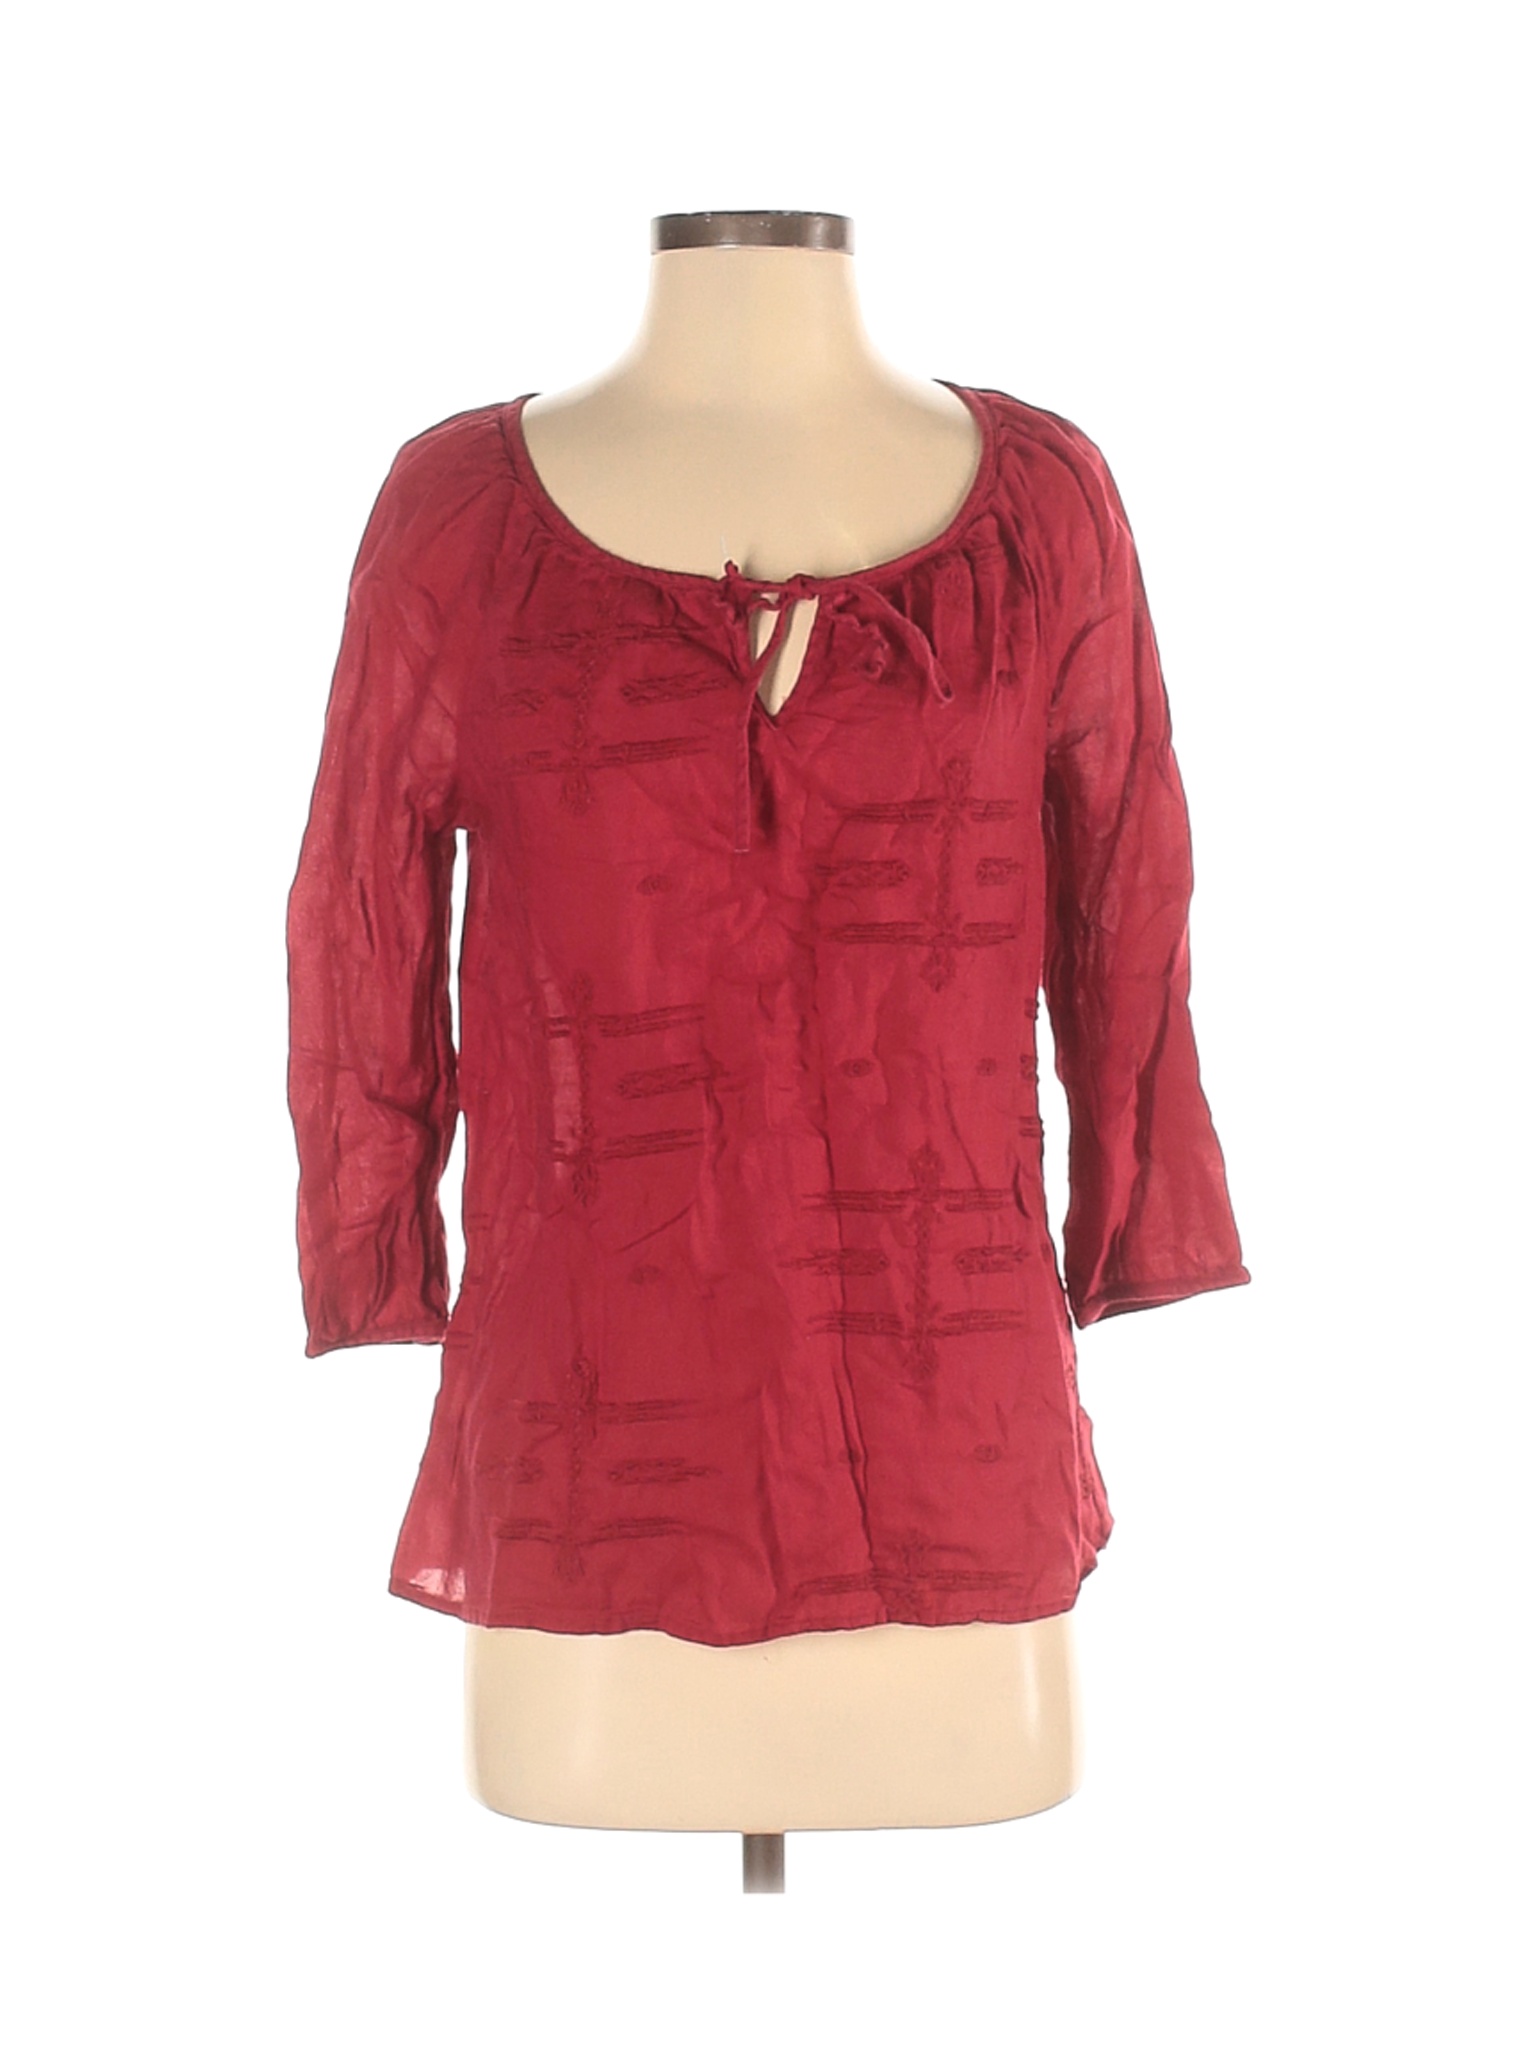 Old Navy Women Red 3/4 Sleeve Blouse S | eBay